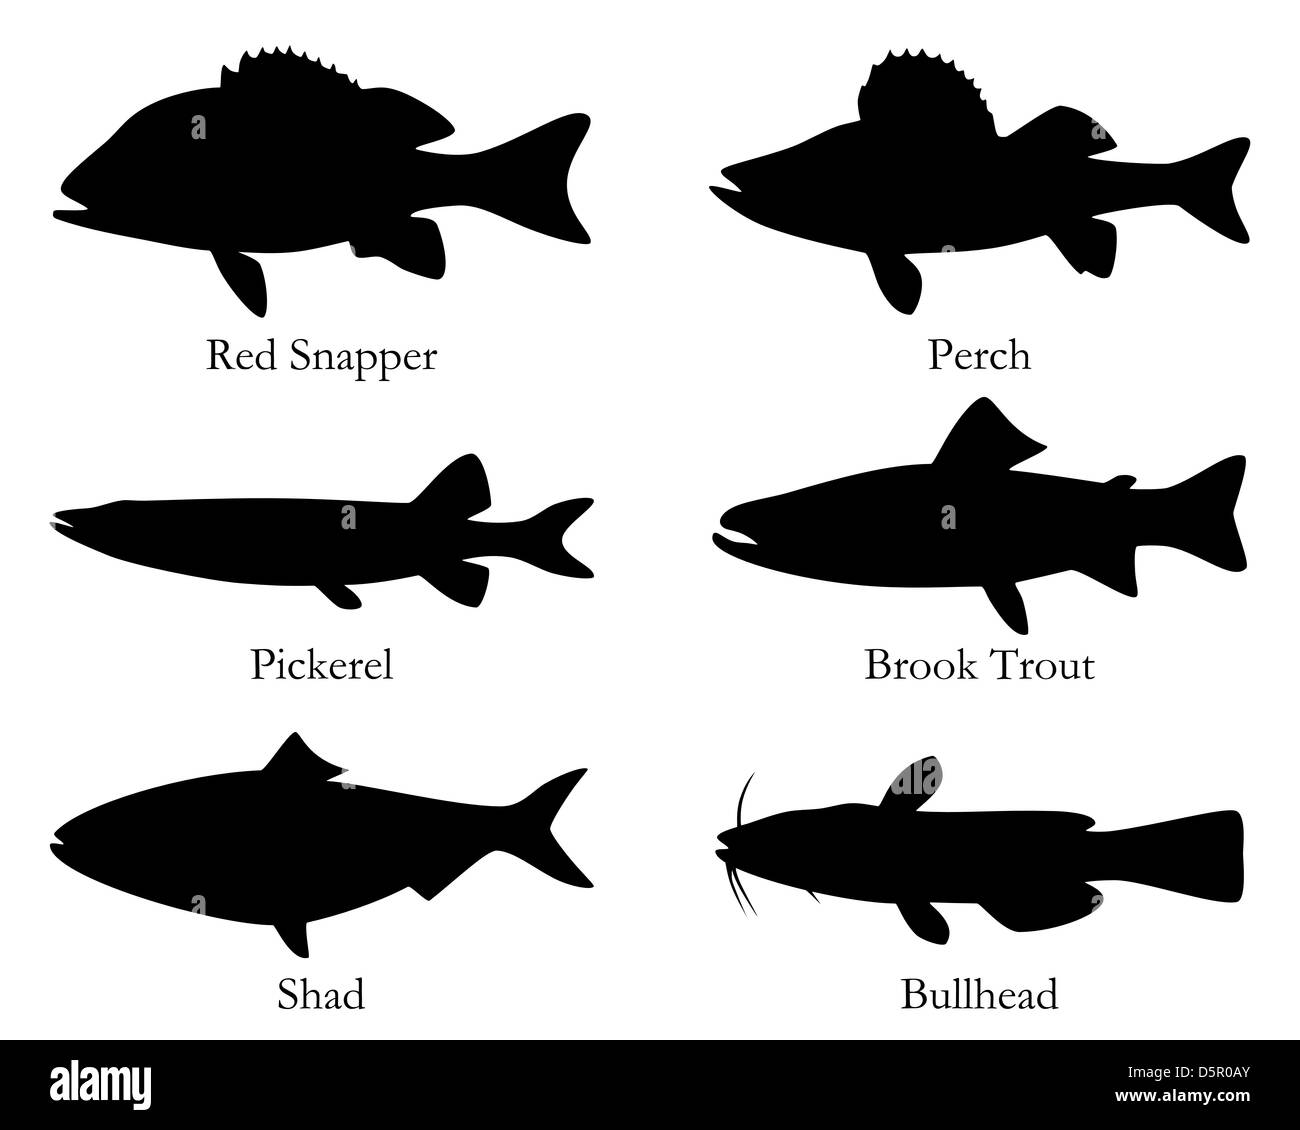 North American food fish Stock Photo